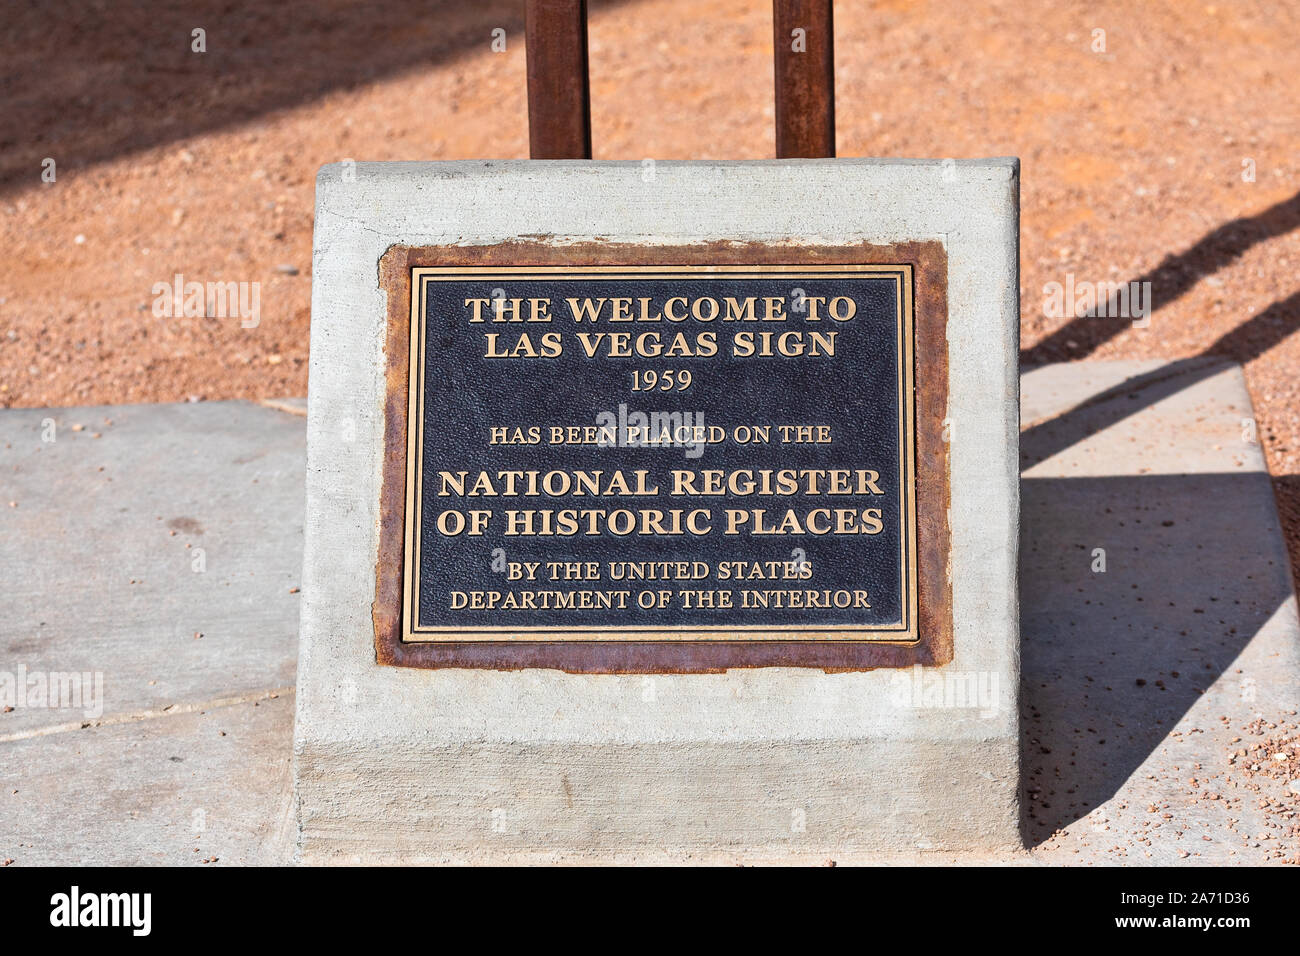 Welcome to Las Vegas sign plaque in Las Vegas, Nevada, USA Stock Photo